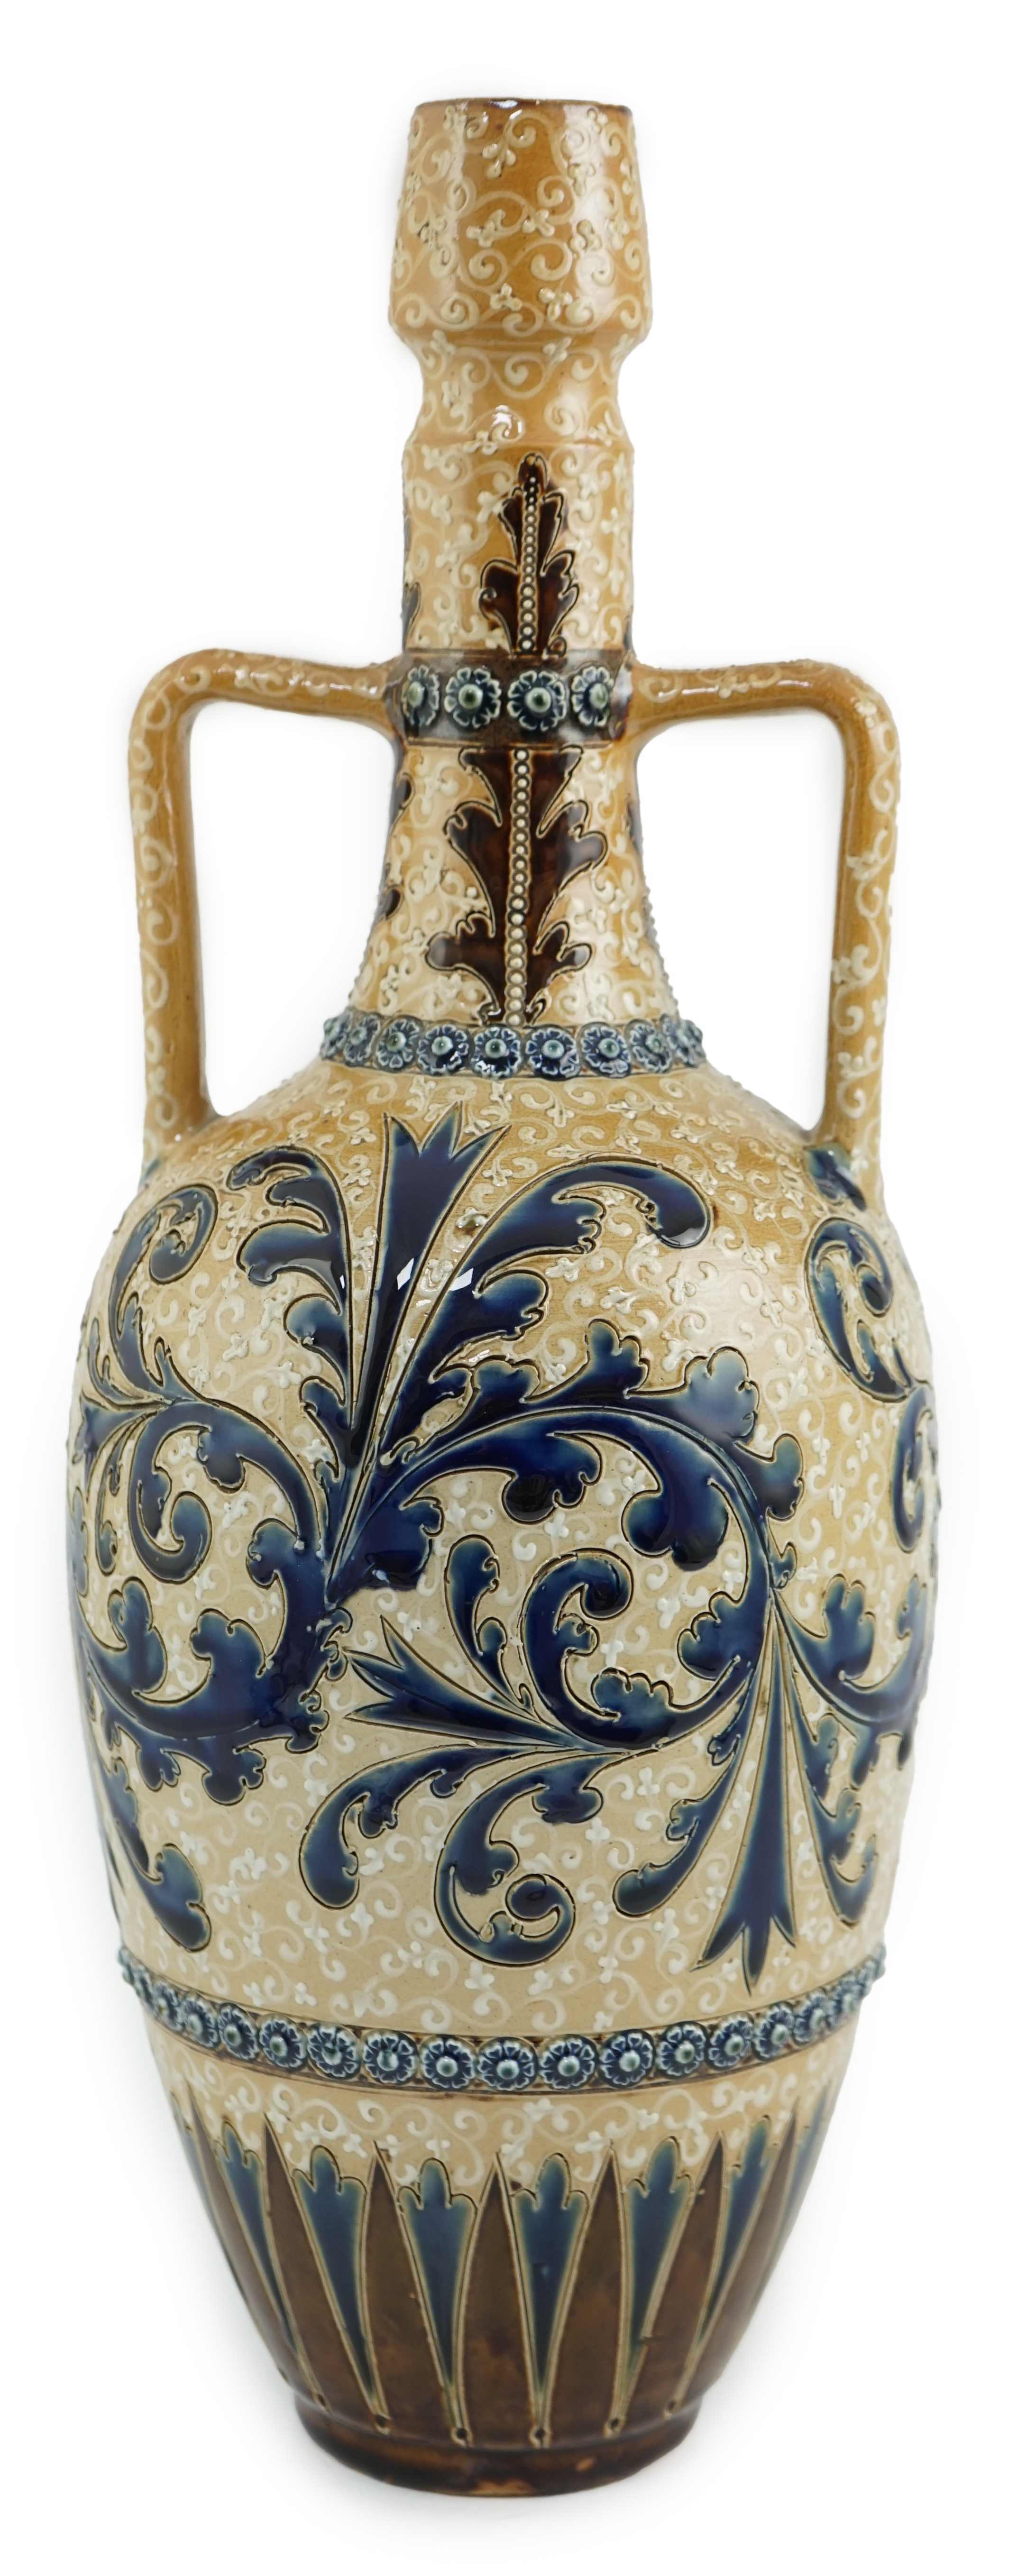 George Tinworth for Doulton Lambeth, a large stoneware vase